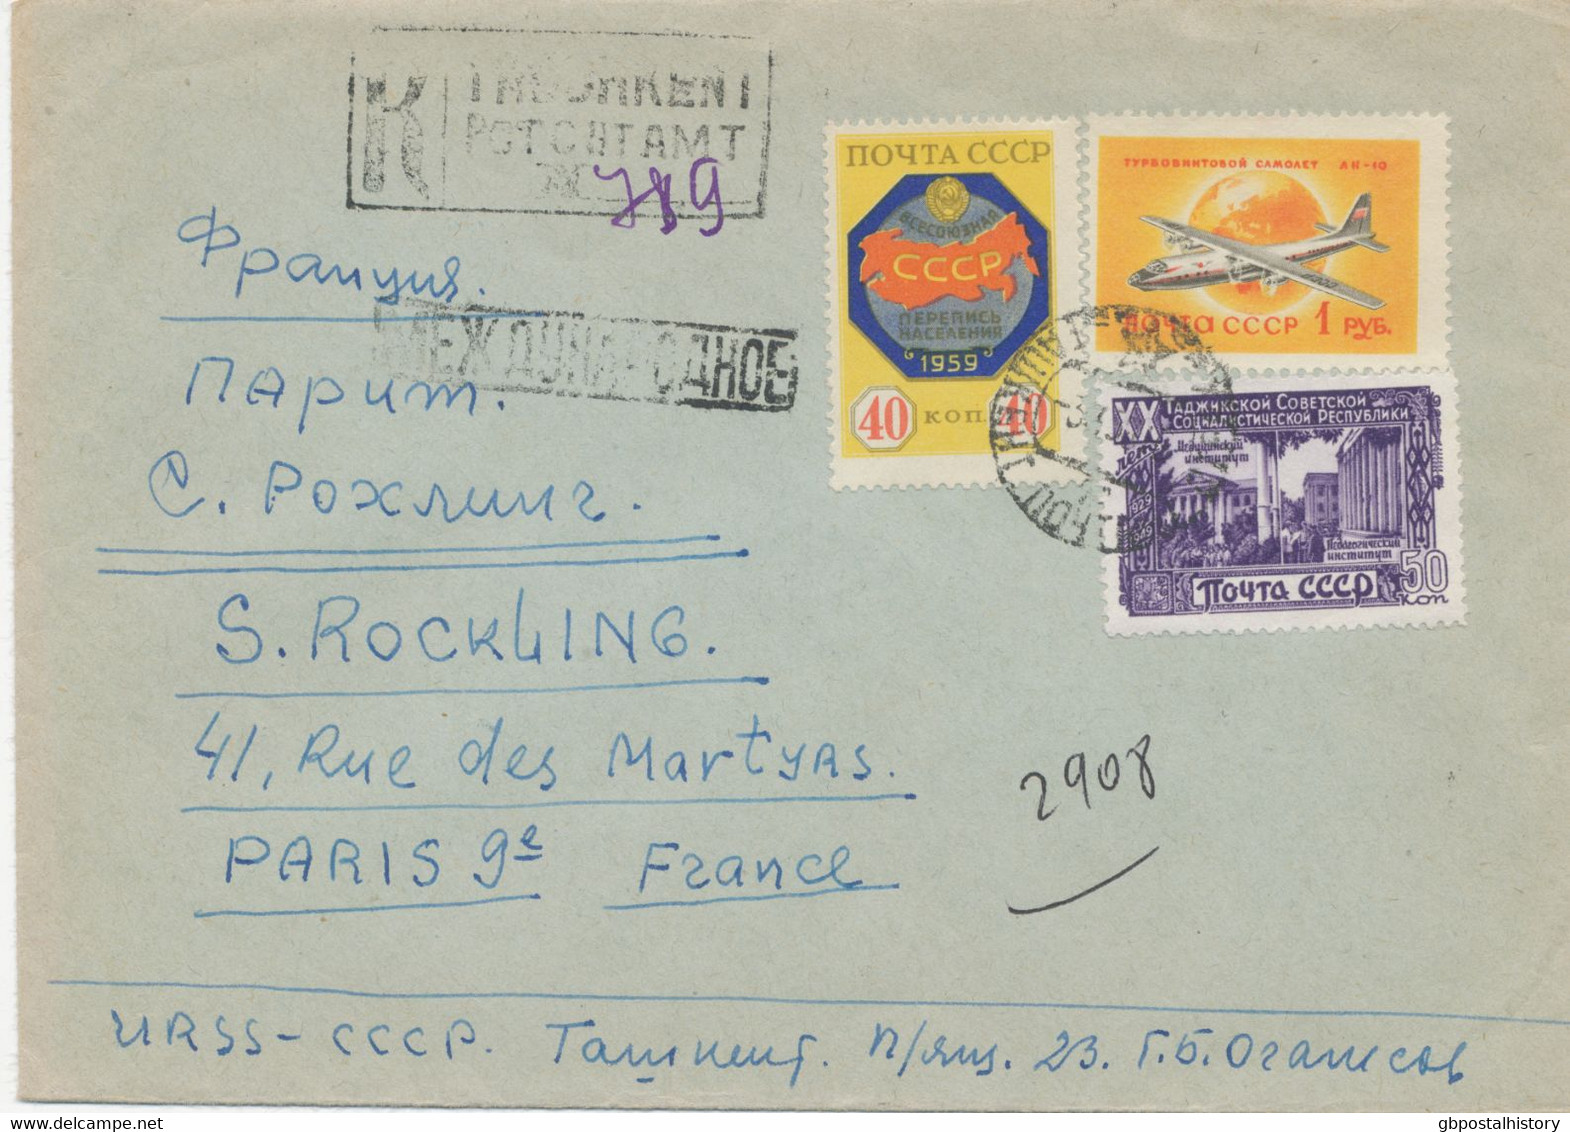 SOWJETUNION 1959 Int. MiF Auf Kab.-R-Brief Nach PARIS   SOVIET UNION 1959 Int. Mixed Franking On Superb R-cover To PARIS - Briefe U. Dokumente